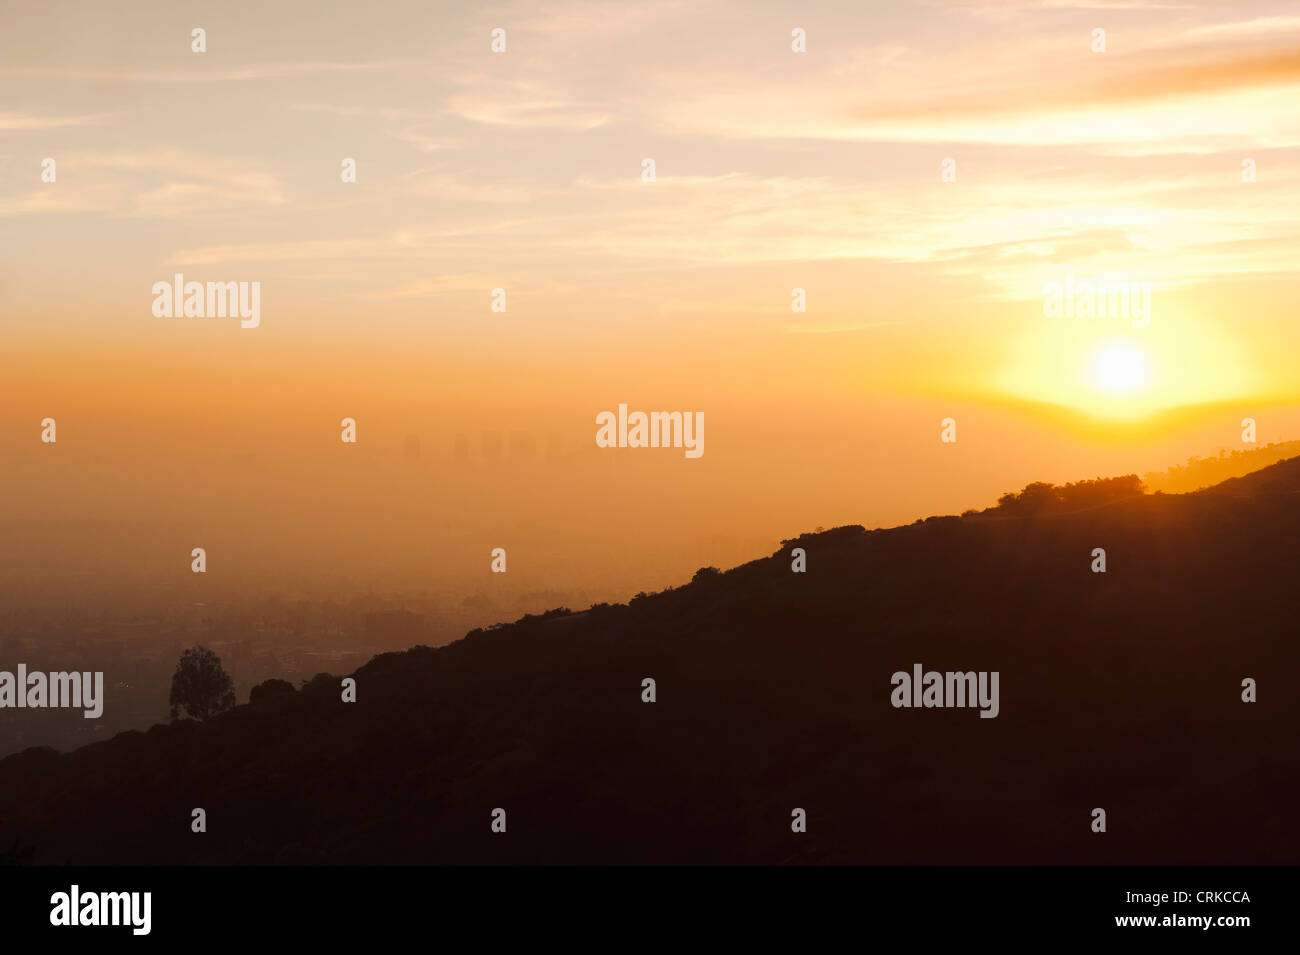 Silhouette of hillside at sunset Stock Photo